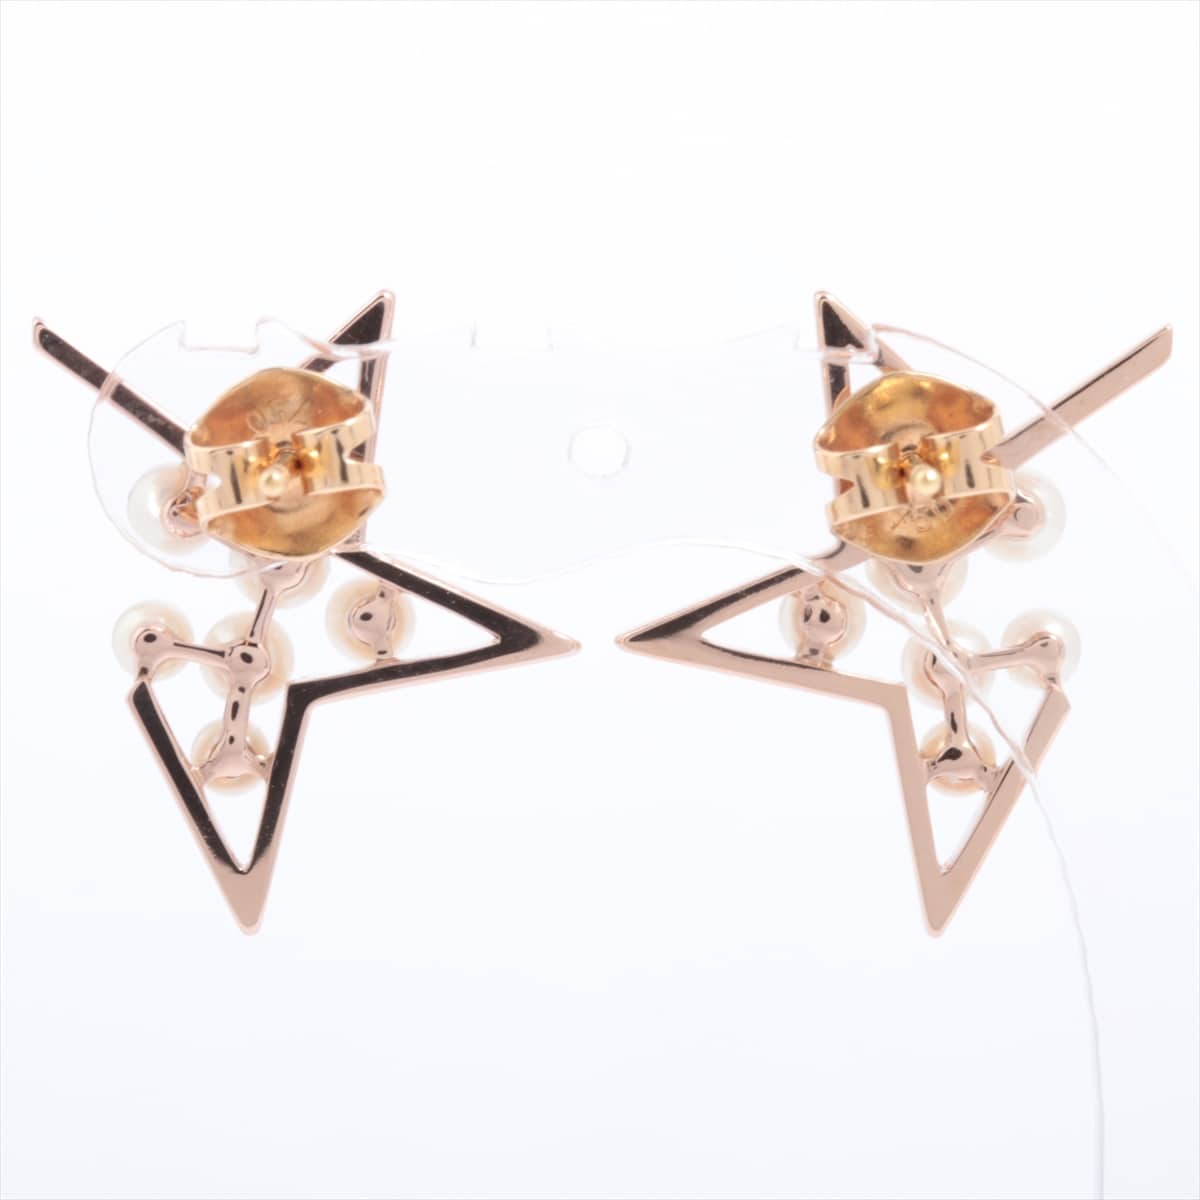 TASAKI TASAKI ABSTRACT Star Piercing jewelry 750SG